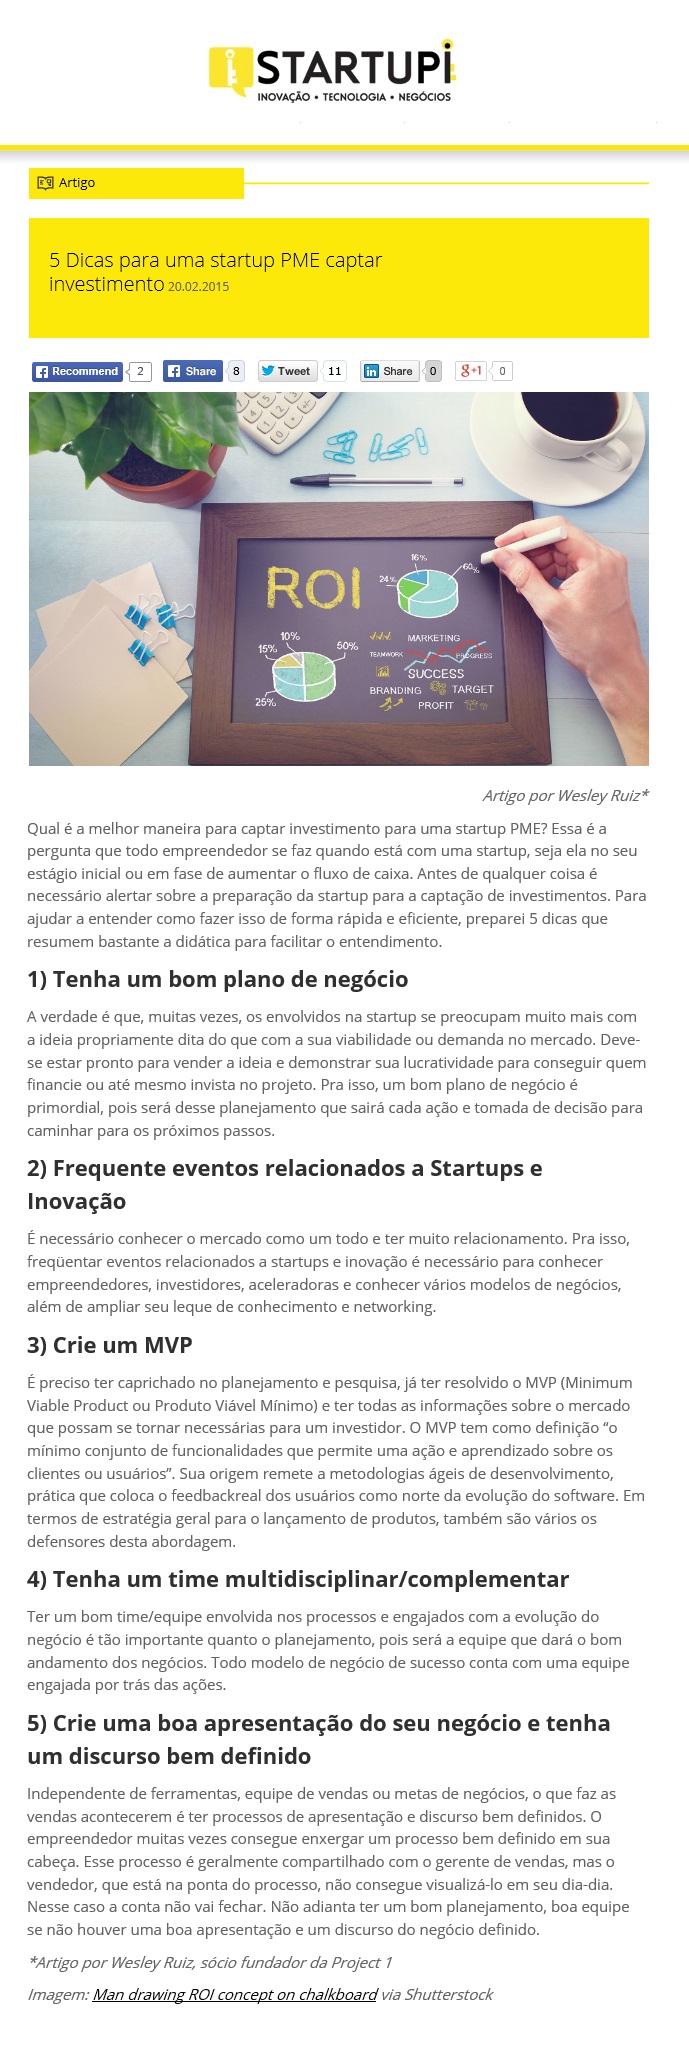 Project1 no StartupI - 20.02.2015